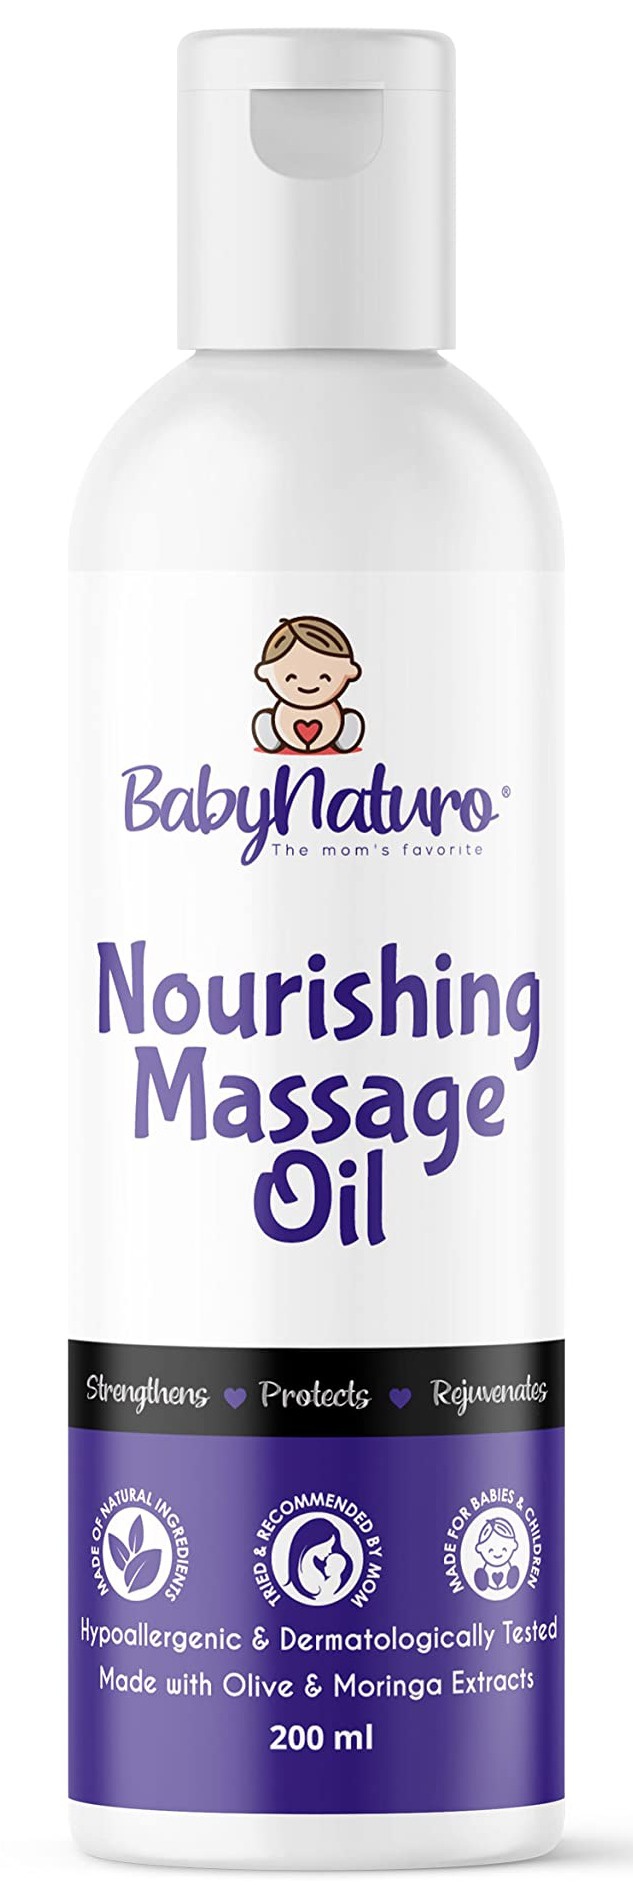 Babynaturo Nourishing Massage Oil